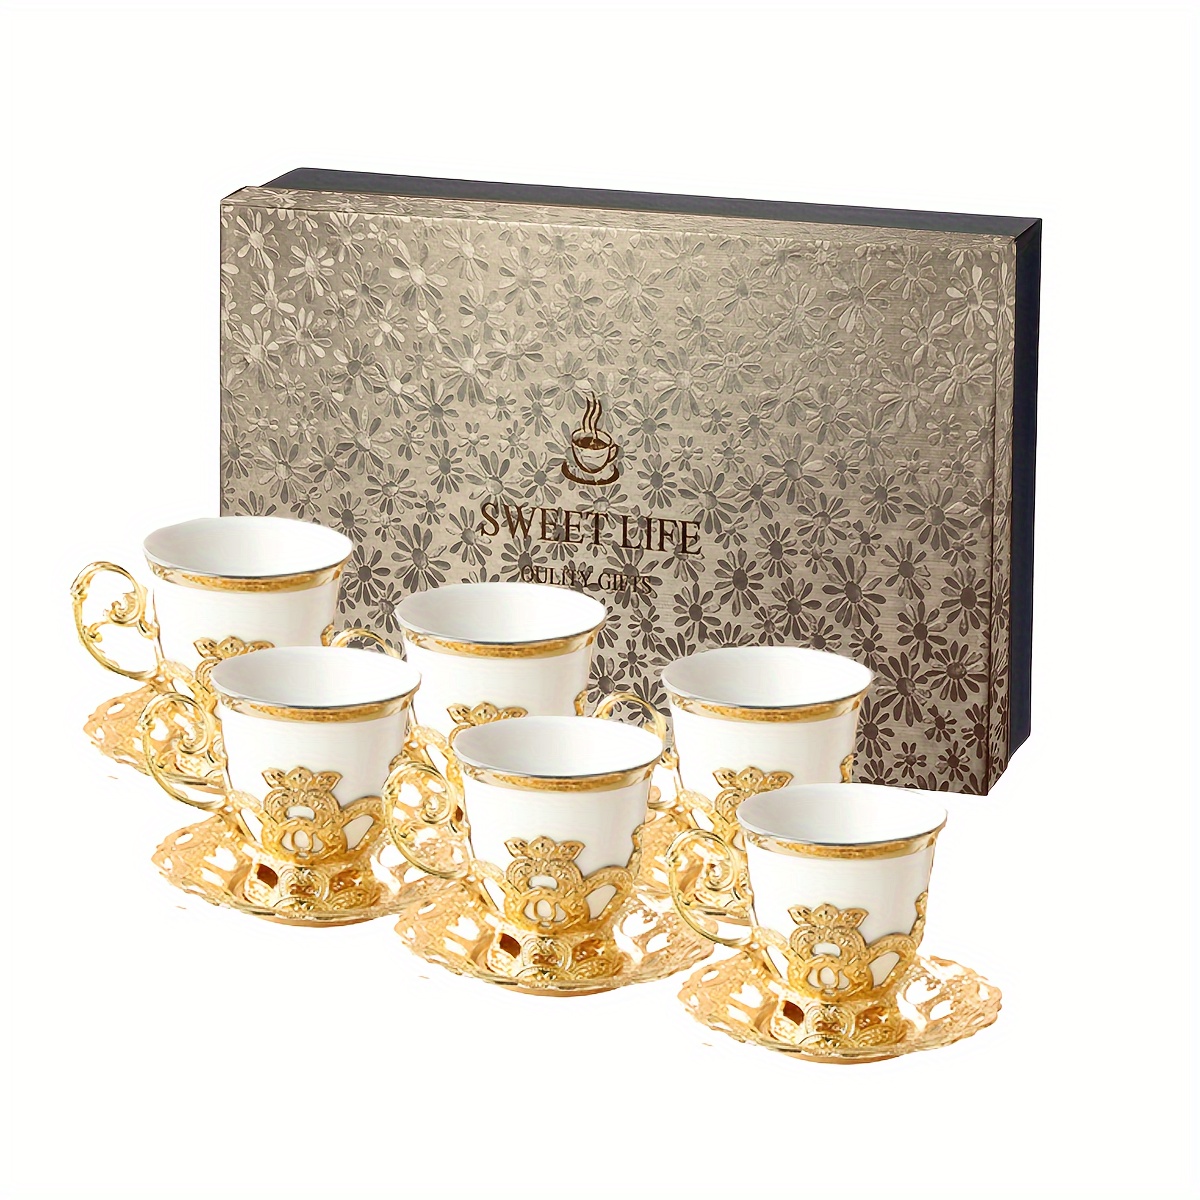 Set of 6 Colorful Porcelain Espresso Cup and Saucer Set - 2 oz, Gold Color  